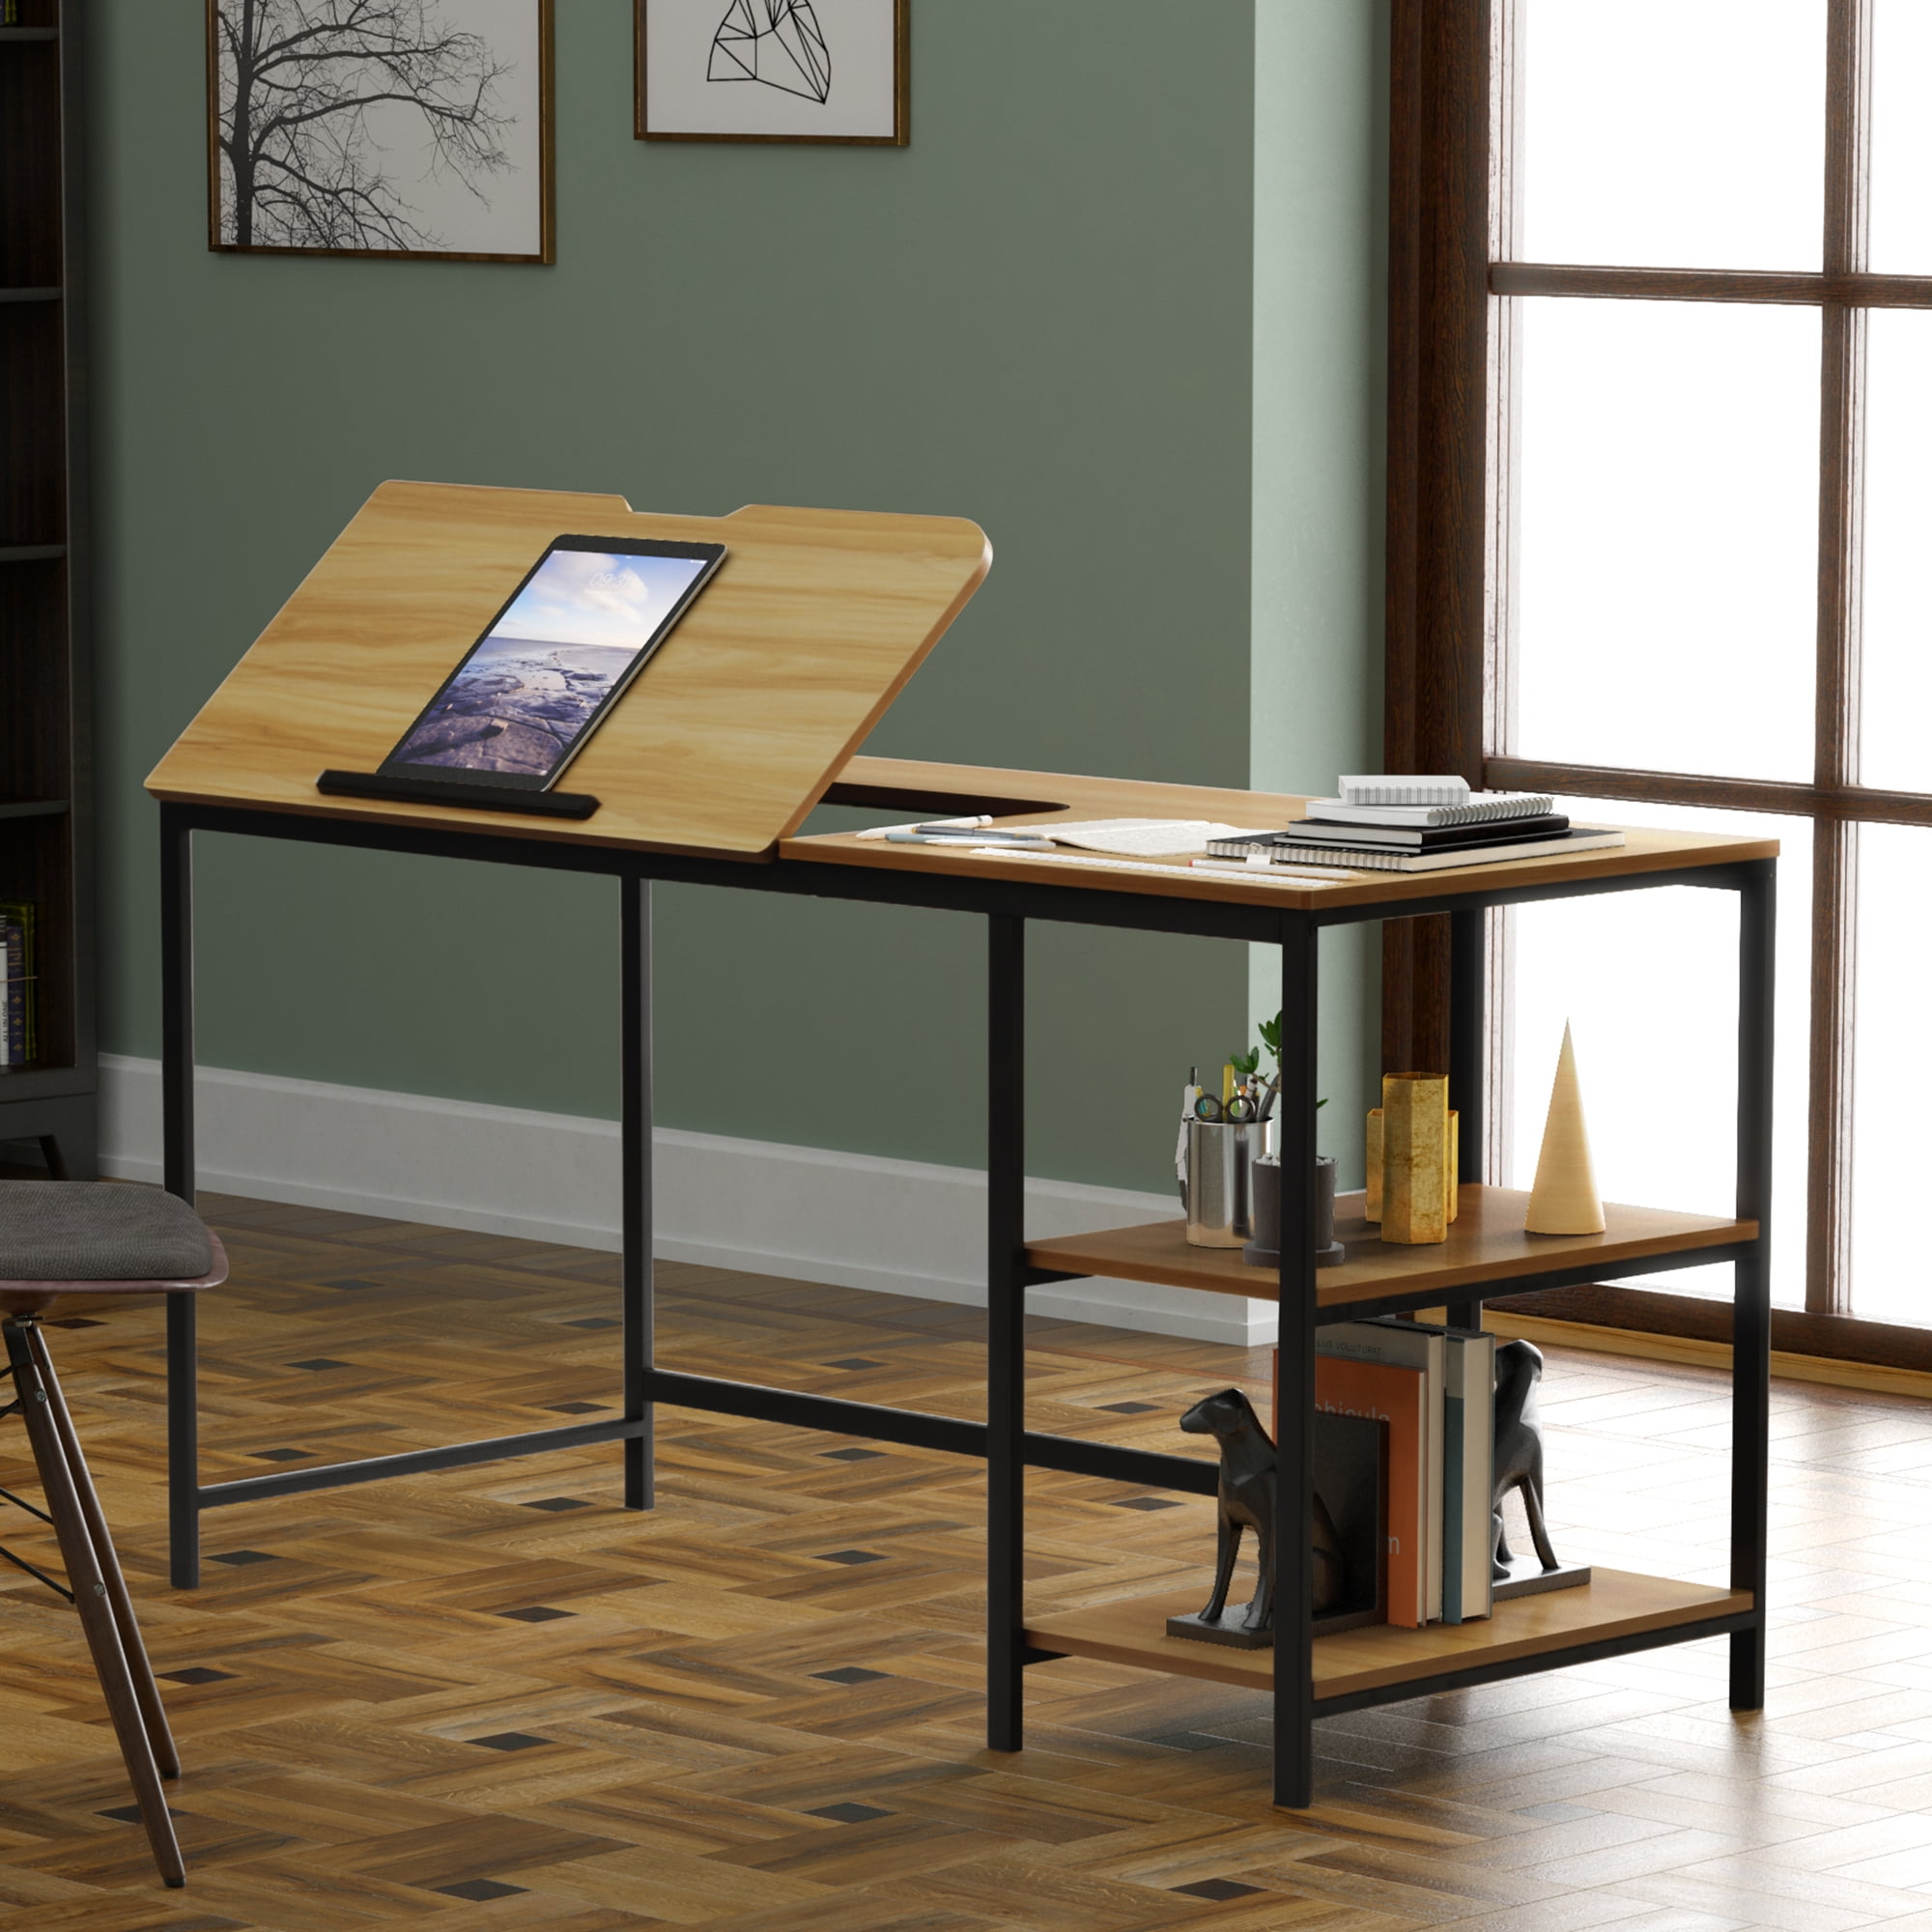 AOOKMIYA Wood Drawing Table Liftable Sketch Bookshelf Easel Stand Desk